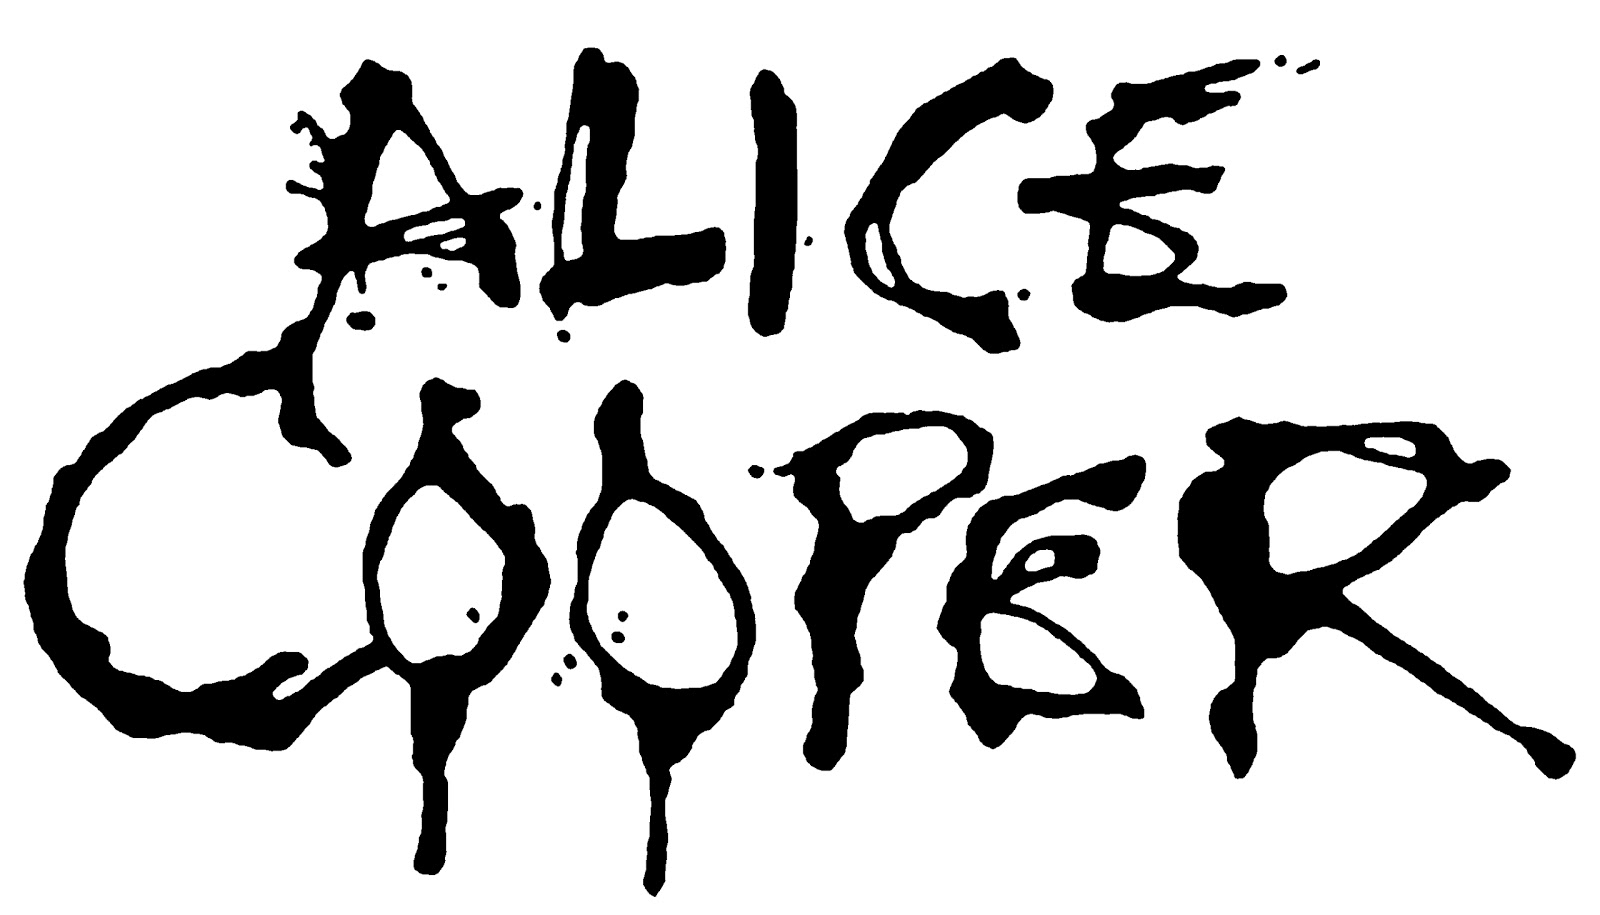 Alice Cooper logo.bmp